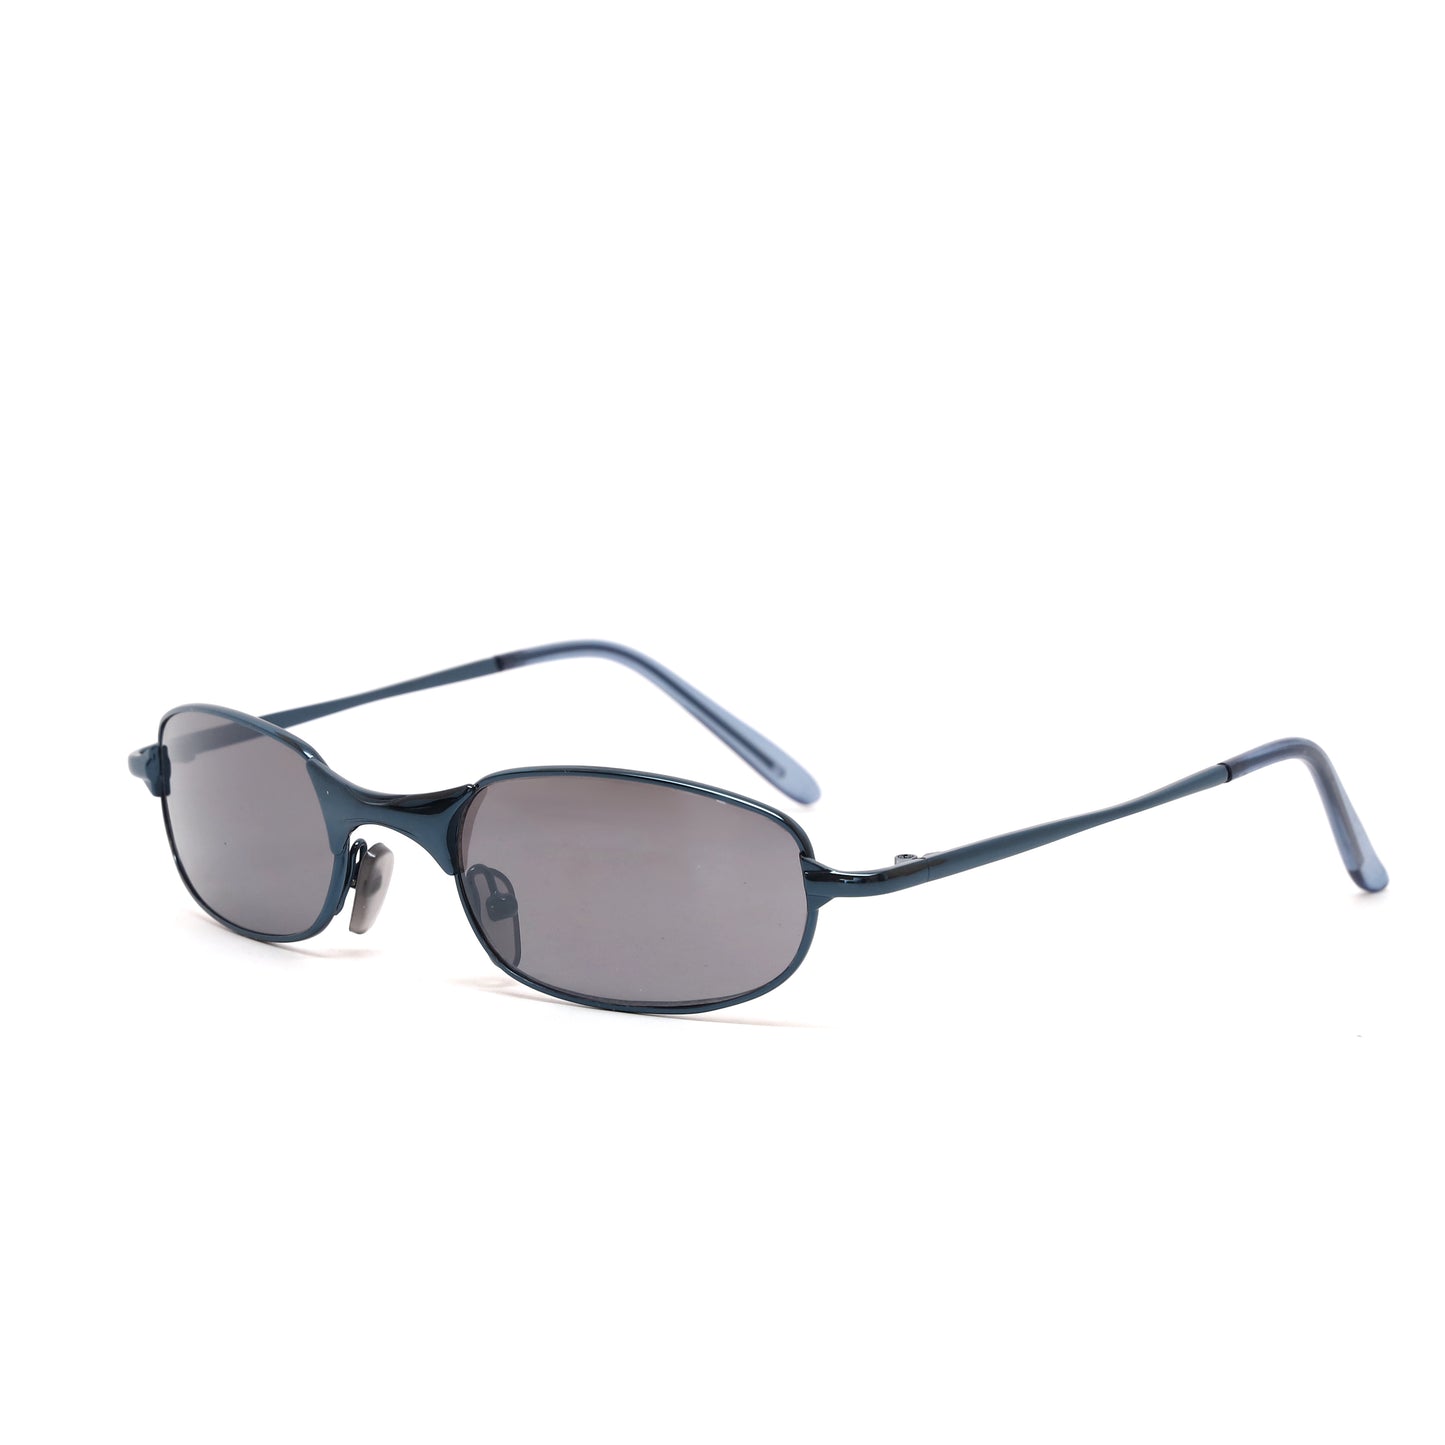 Vintage Small Size 90s Matrix Style Sunglasses - Gradient